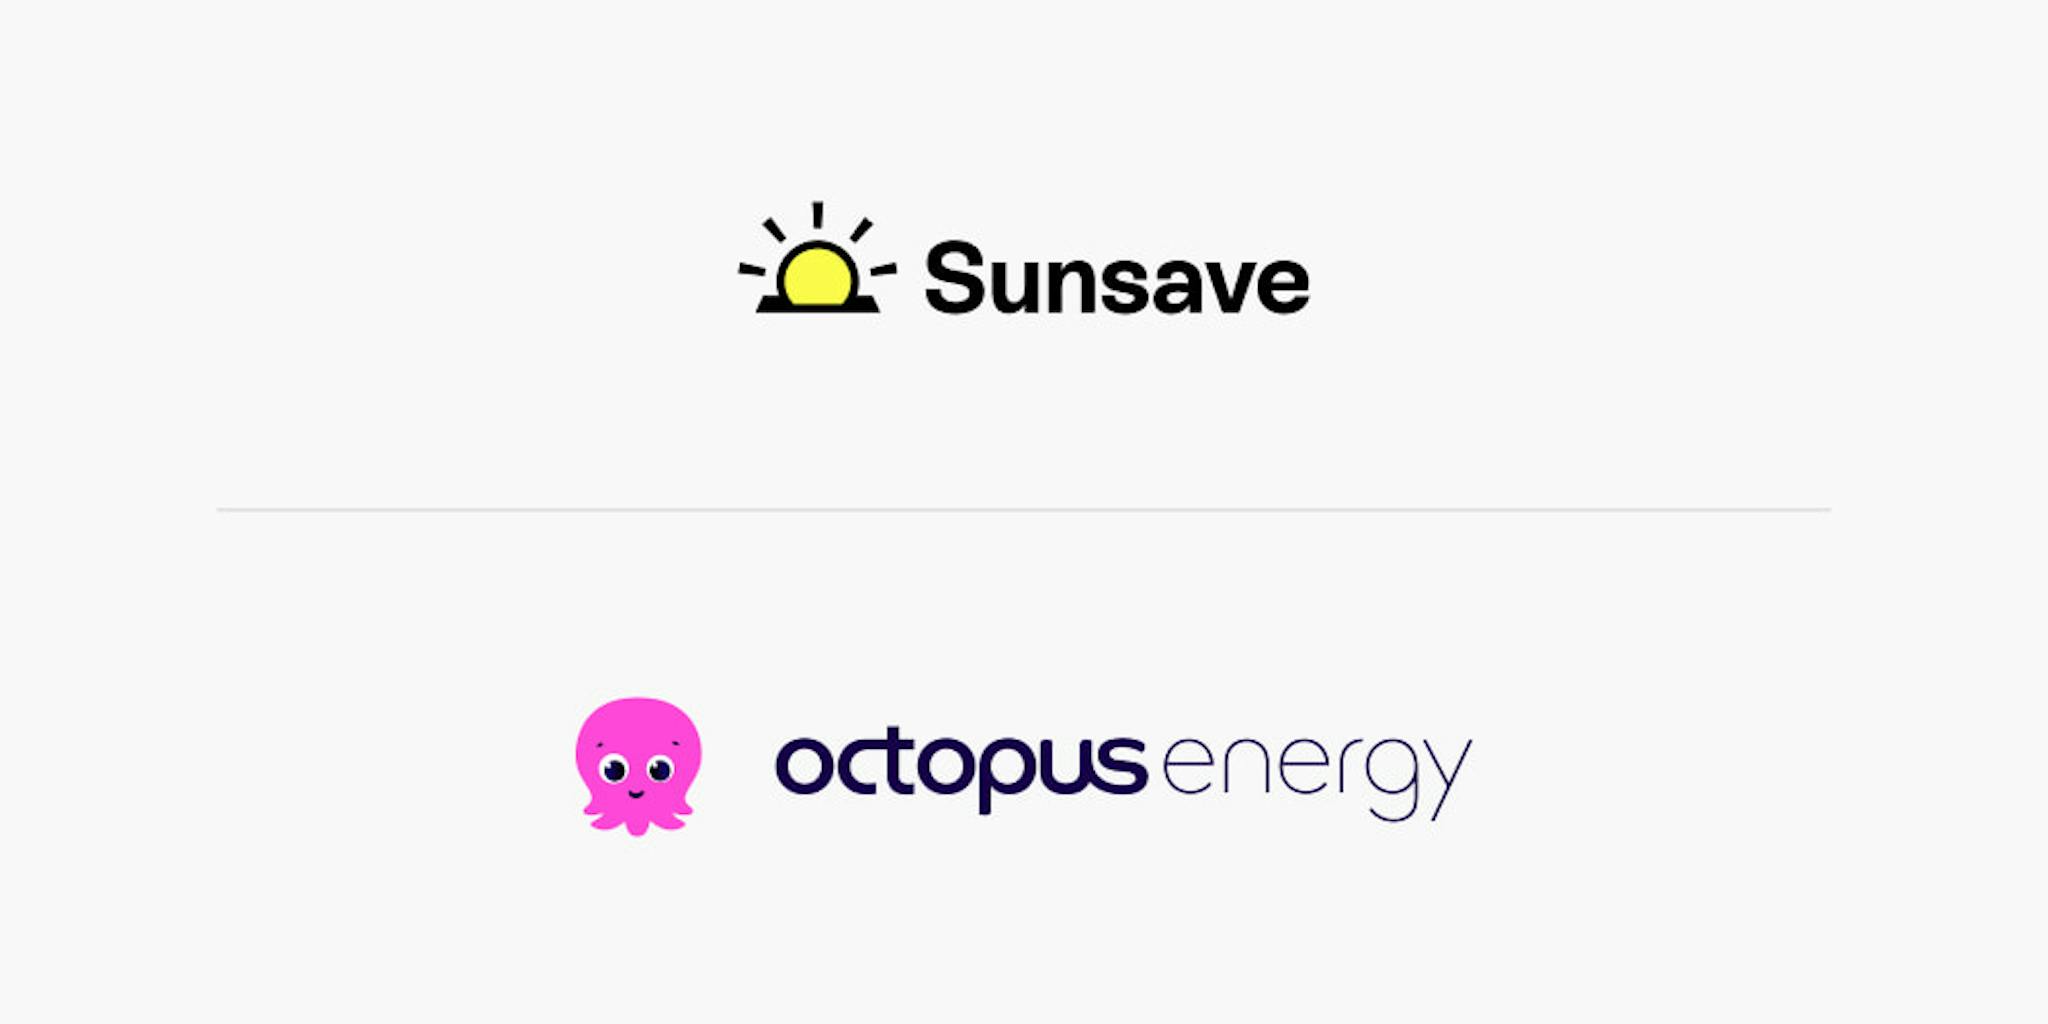 Sunsave logo above the Octopus Energy logo